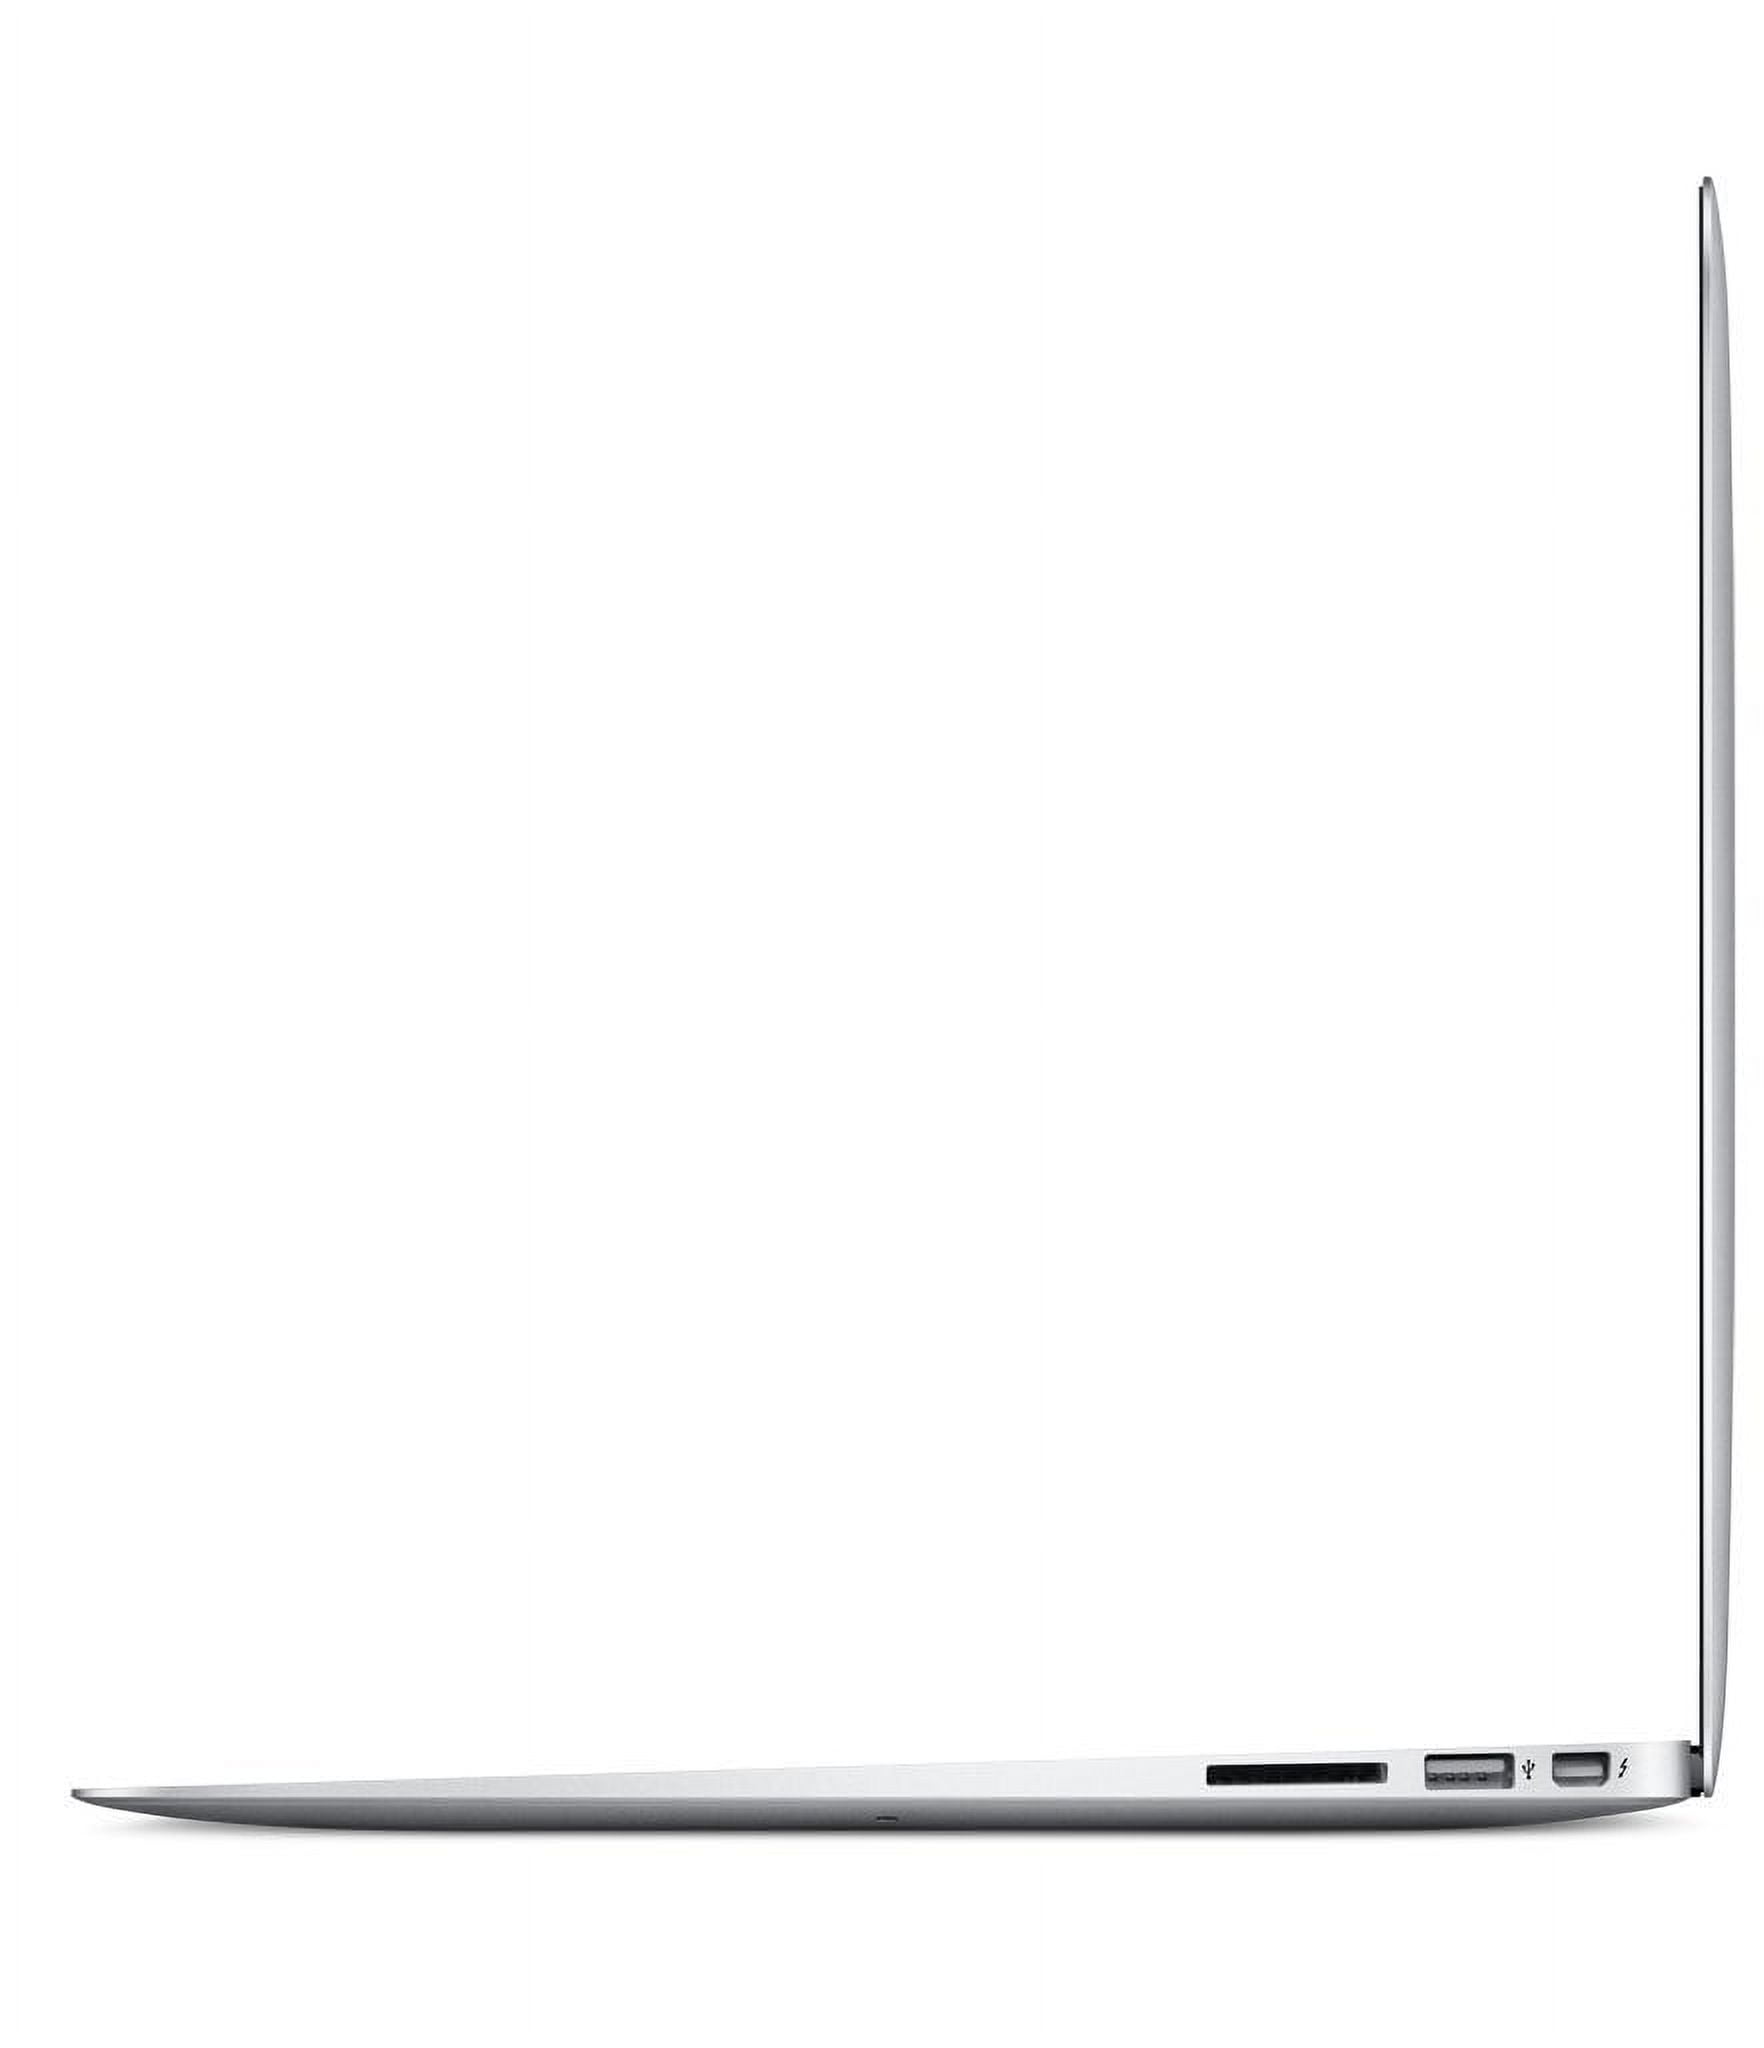 Apple MacBook Air MC965LL/A 13.3-Inch Laptop (1.7GHz Intel Core i5